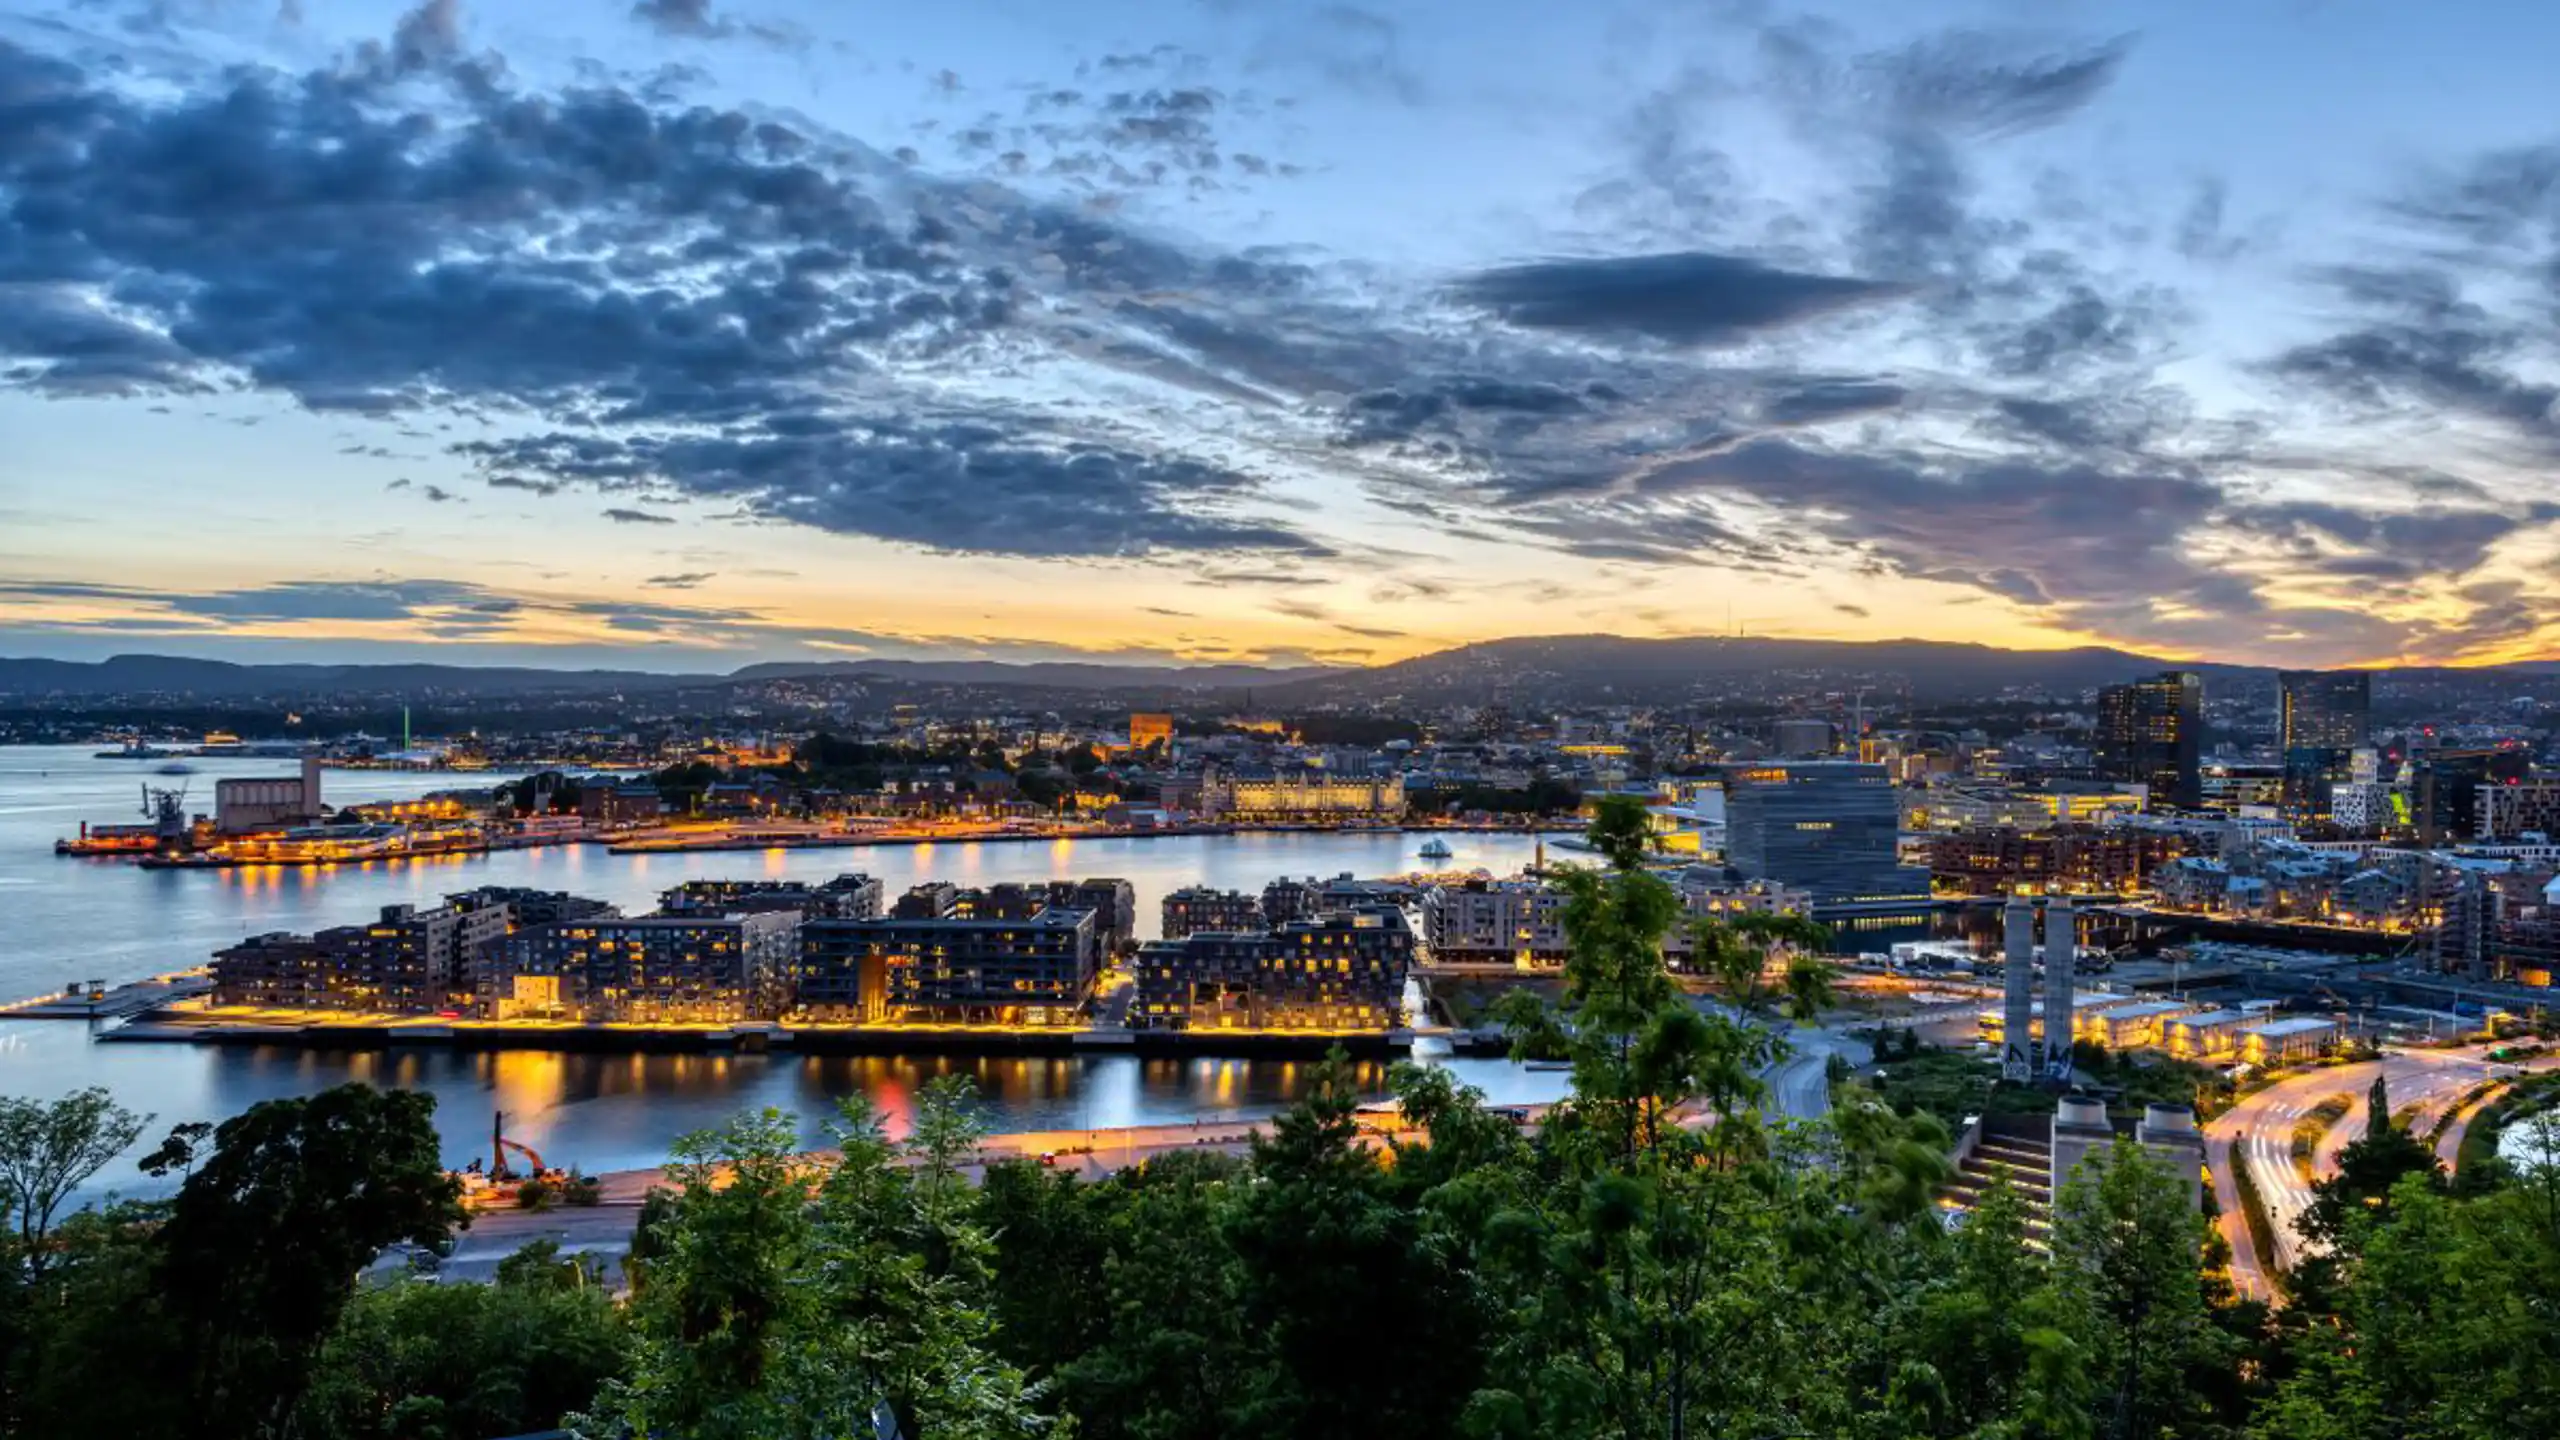 The Lights Of Oslo In Norway 2023 11 27 05 37 03 Utc (1)